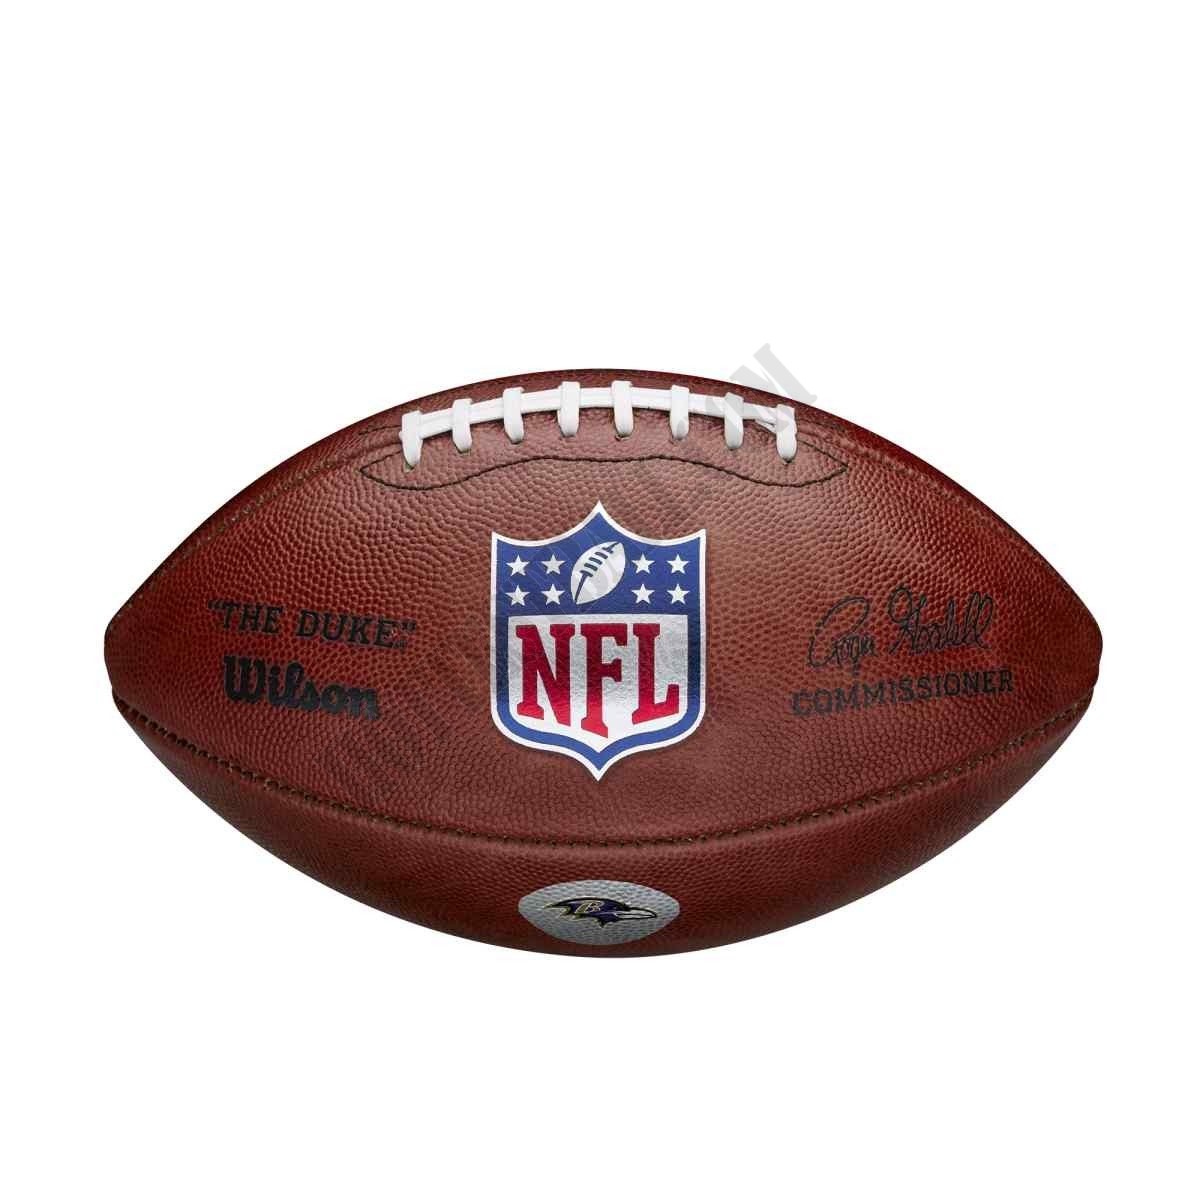 The Duke Decal NFL Football - Baltimore Ravens ● Wilson Promotions - -1